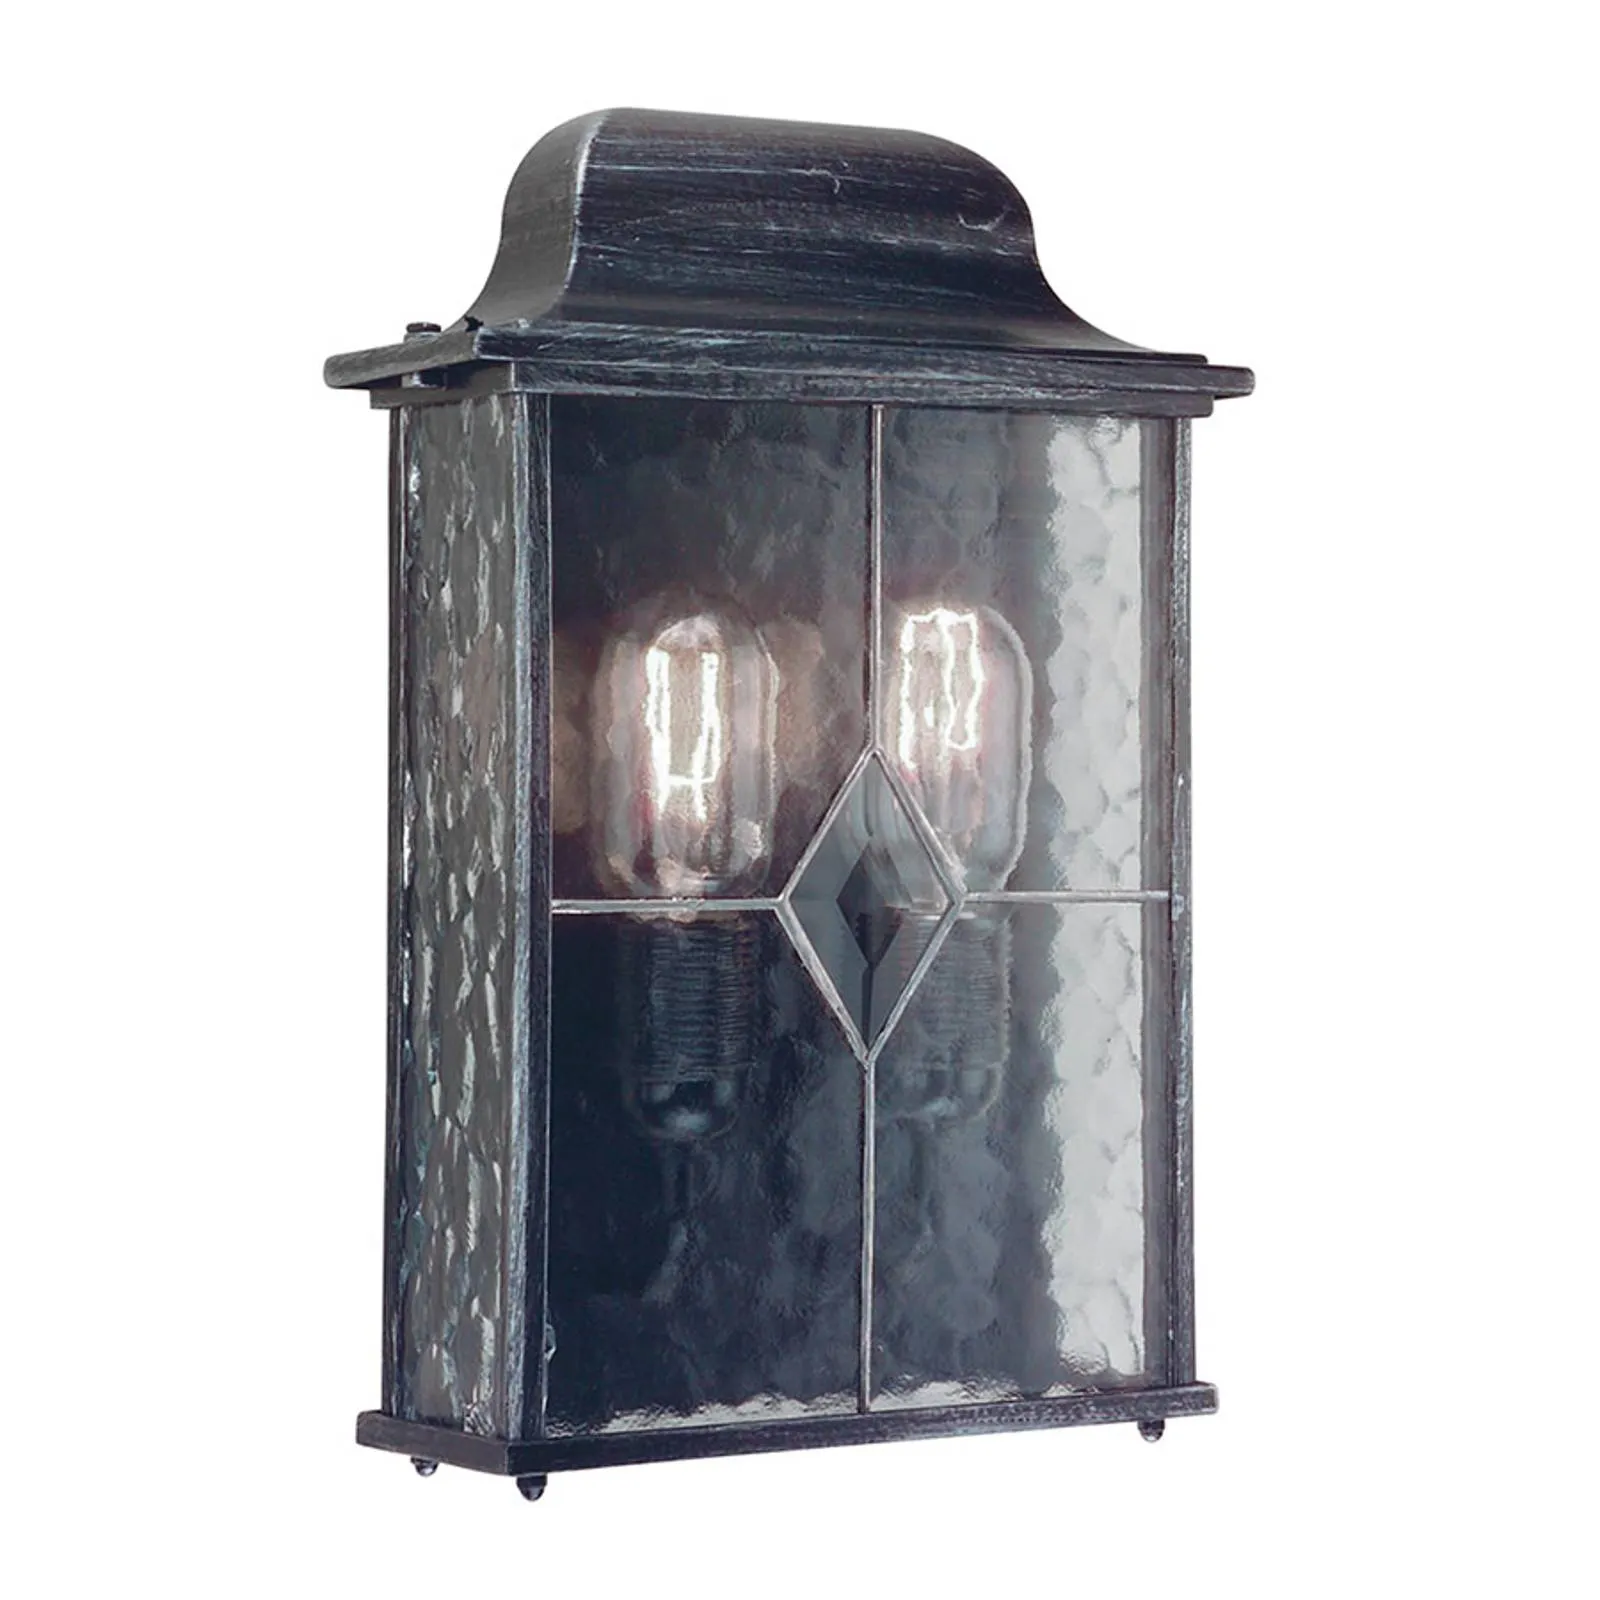 Wexford WX7 wall light, half lantern